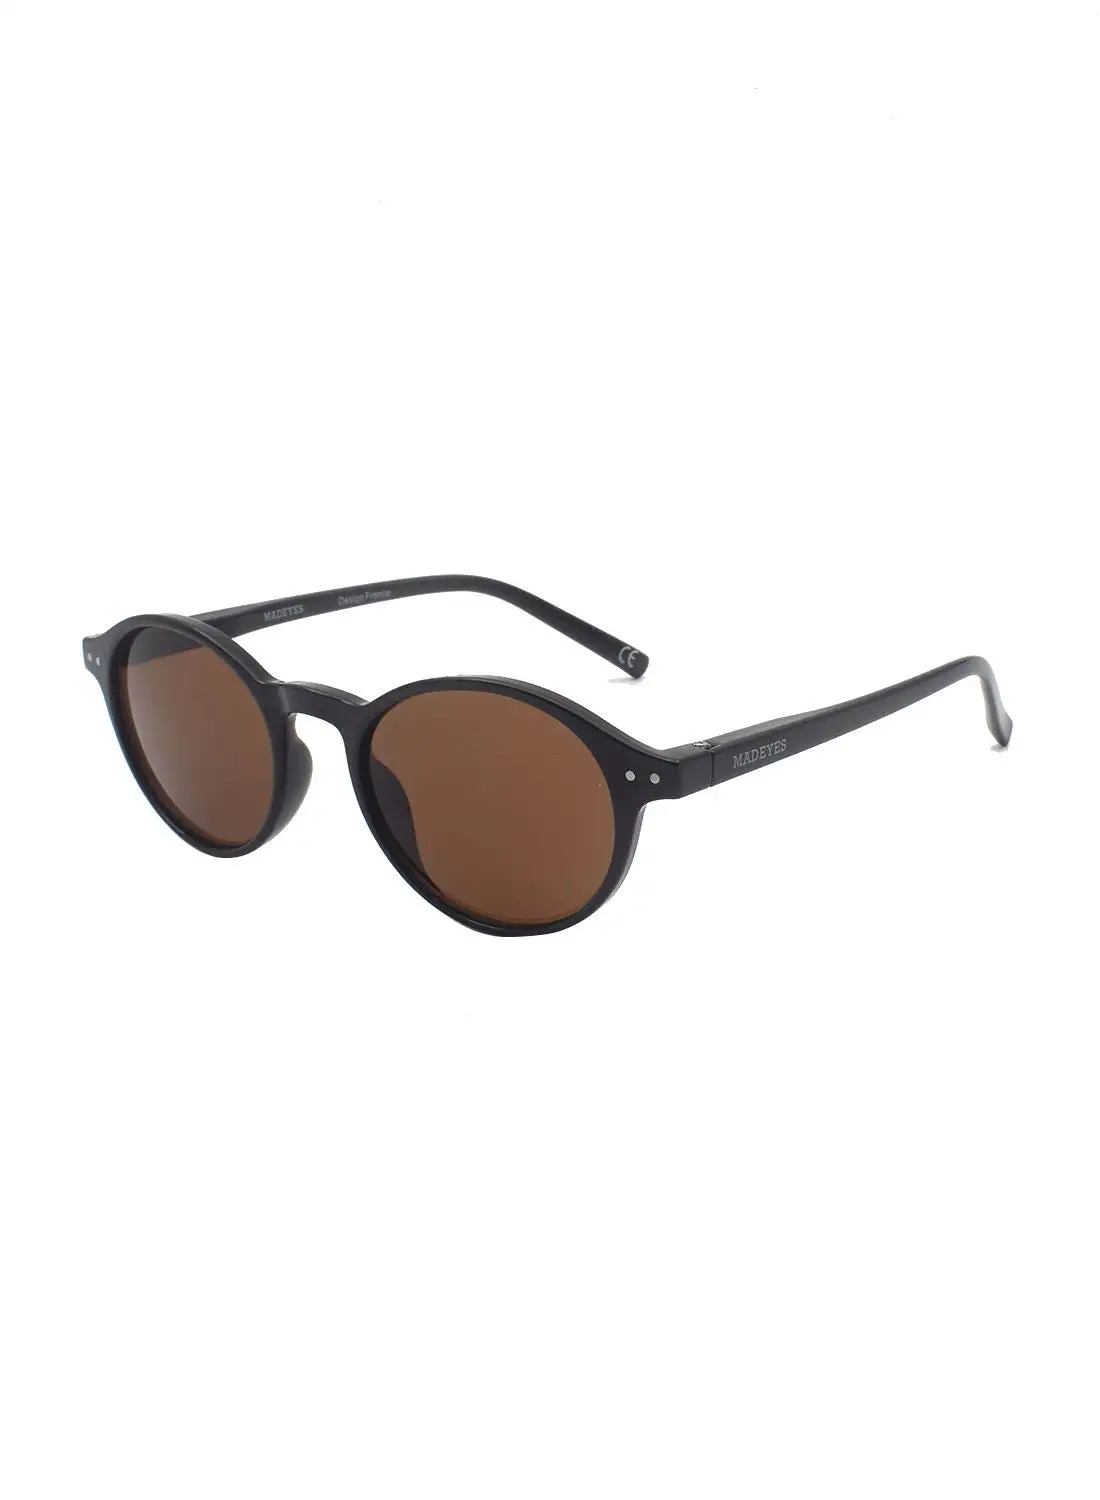 MADEYES Oval Sunglasses EE9S358-1